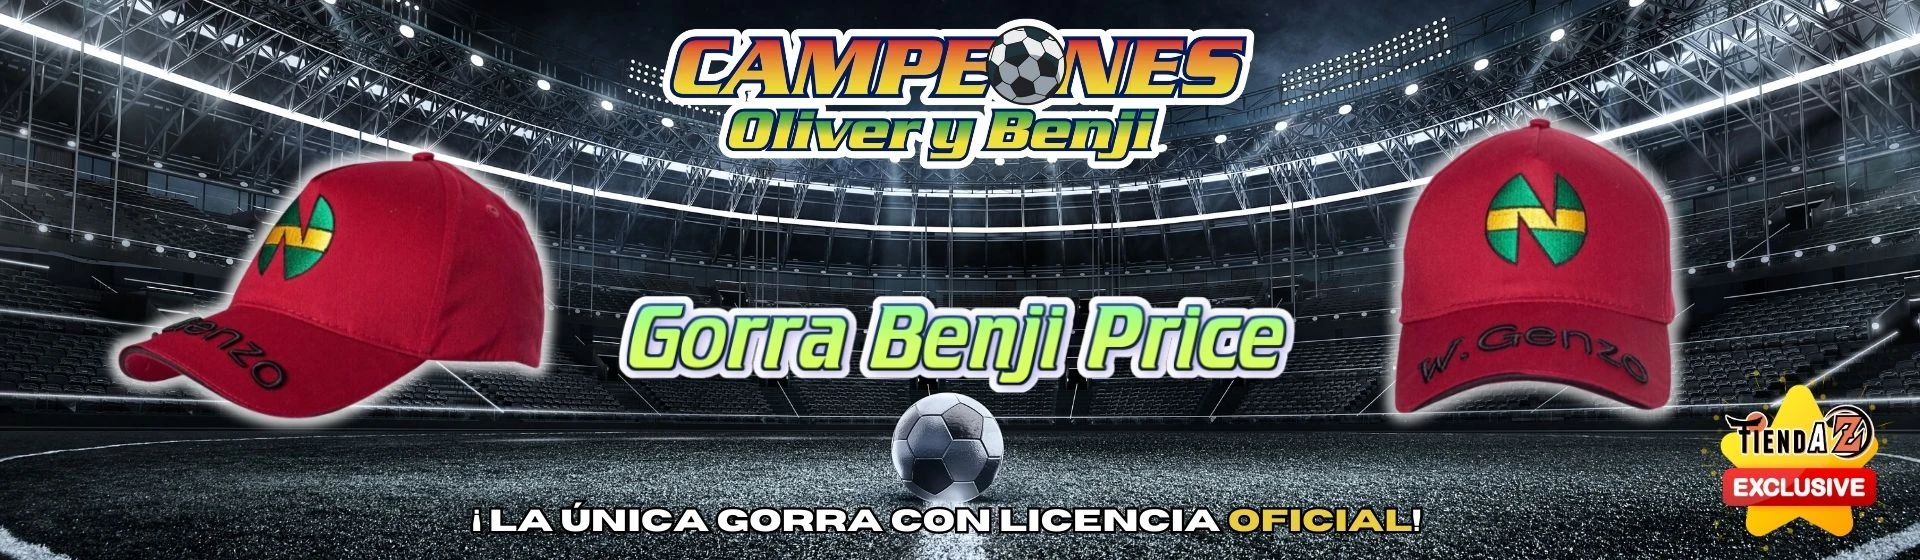 gorra-benji-price-w-genzo-campeones-oliver-y-benji-banner